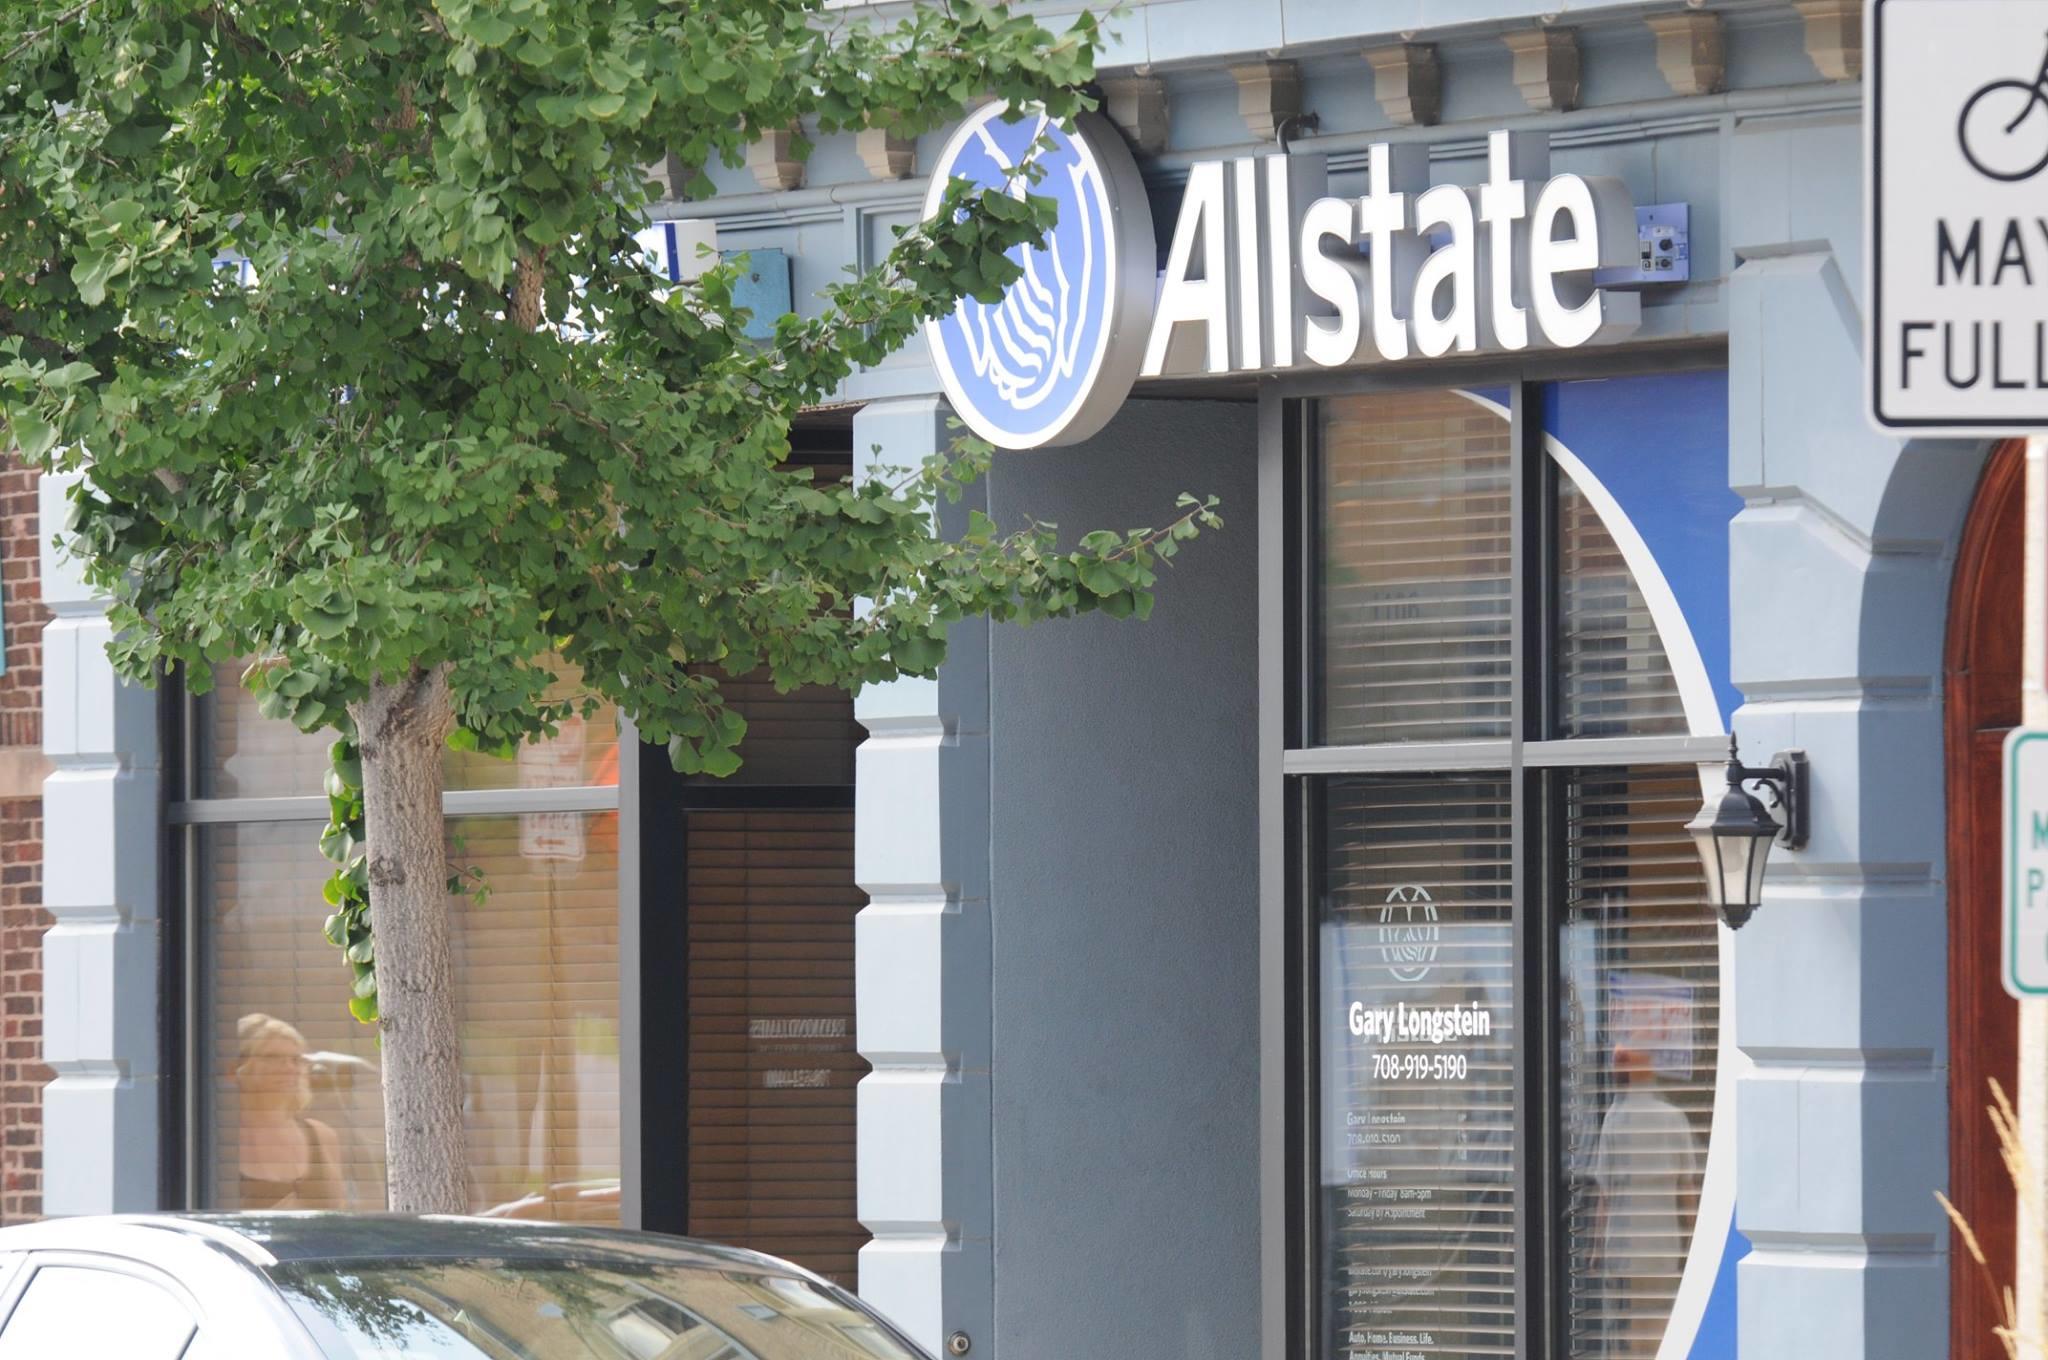 Gary Longstein: Allstate Insurance Photo